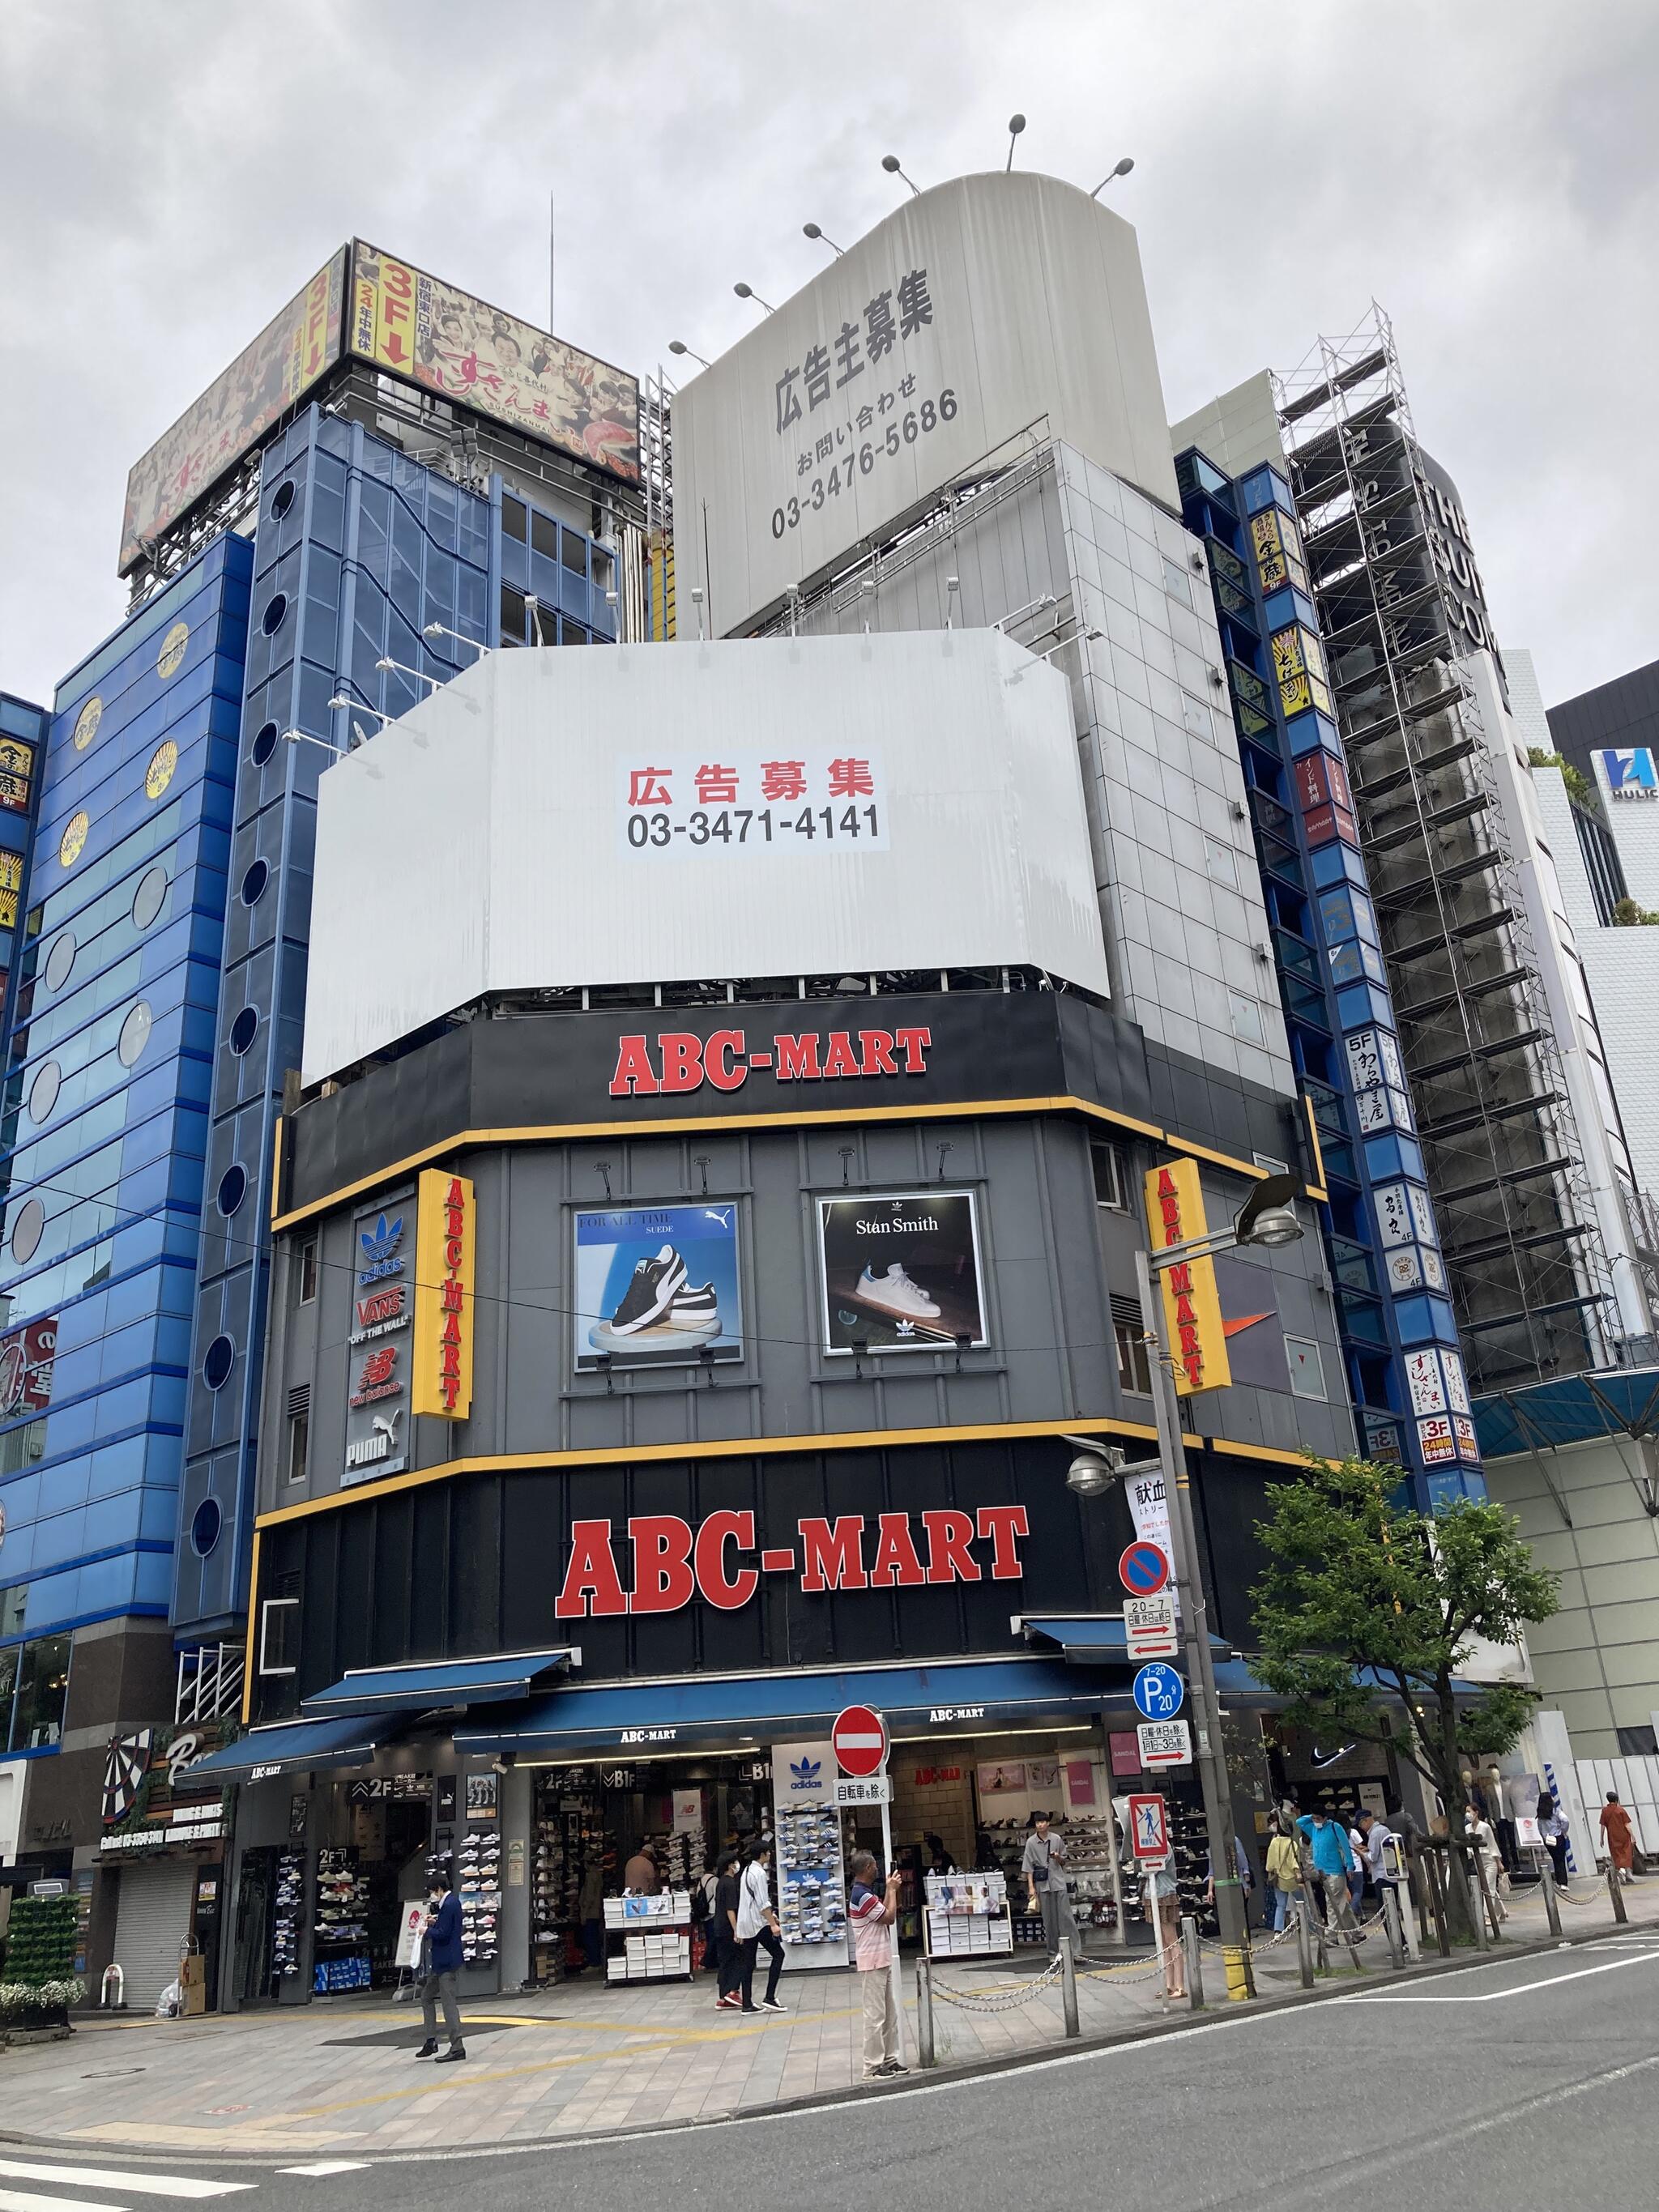 ABCマート 新宿本店の代表写真8